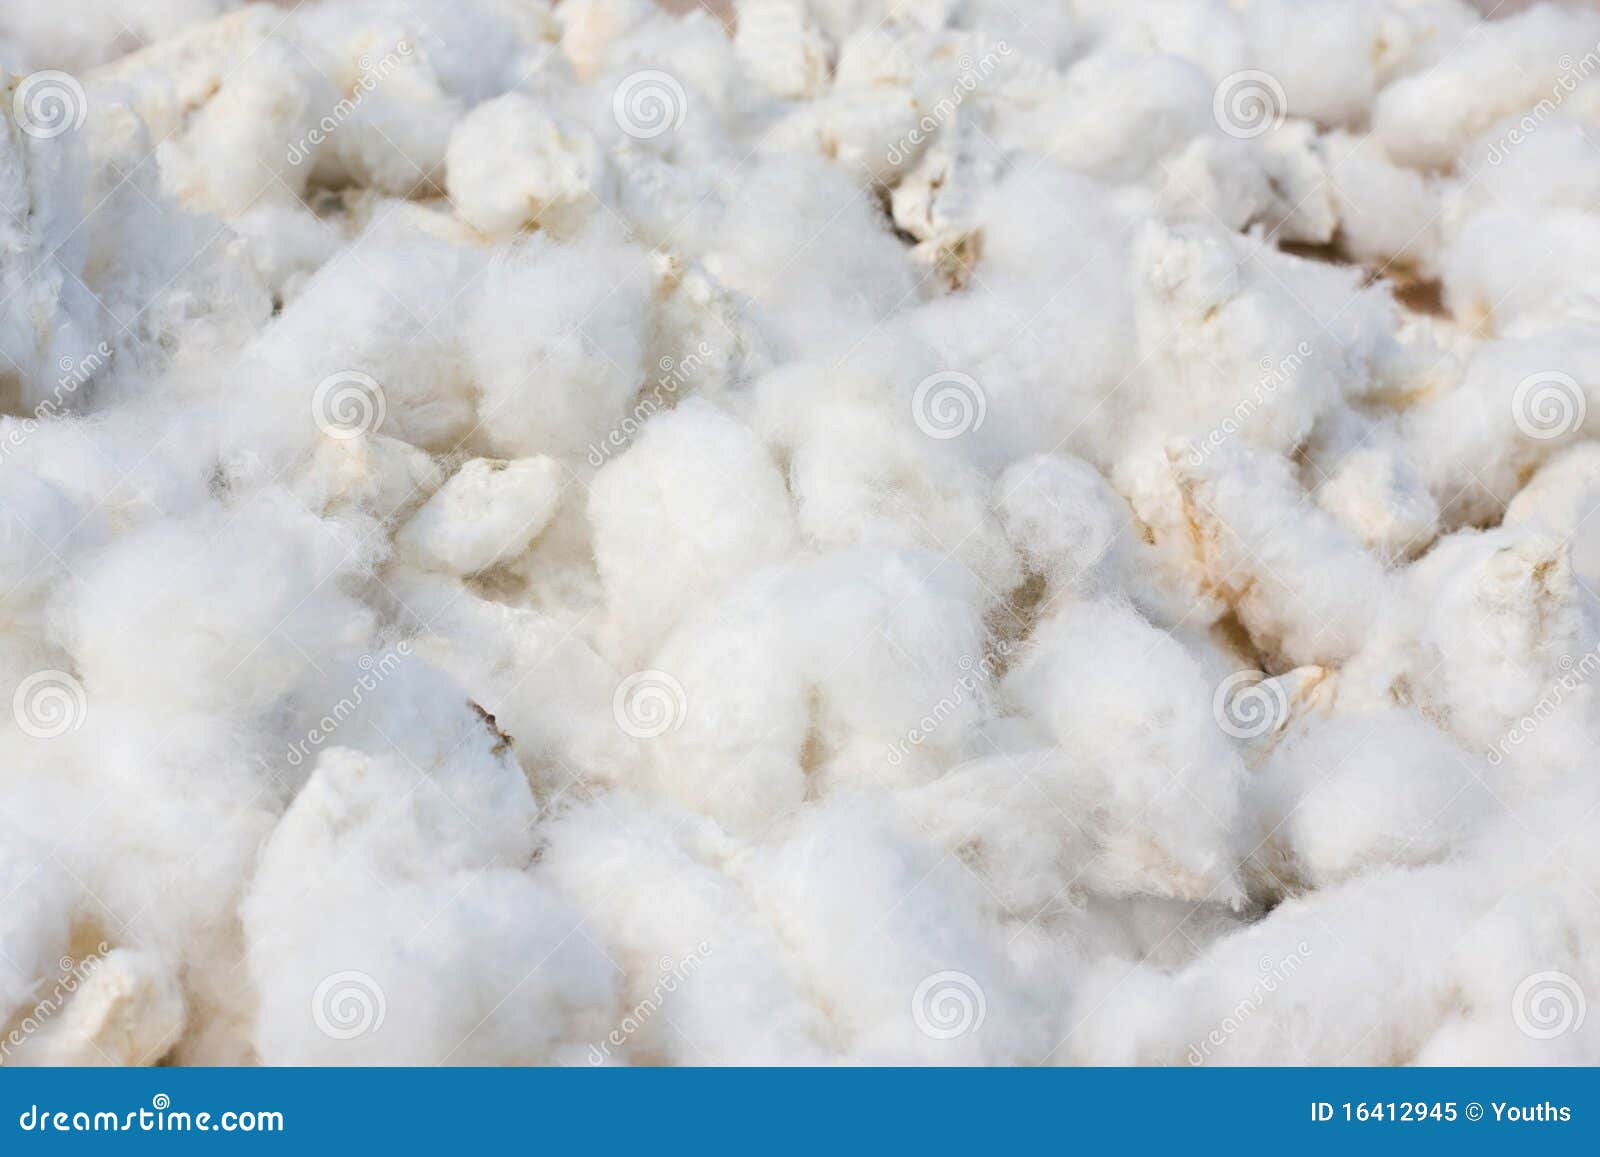 cotton background